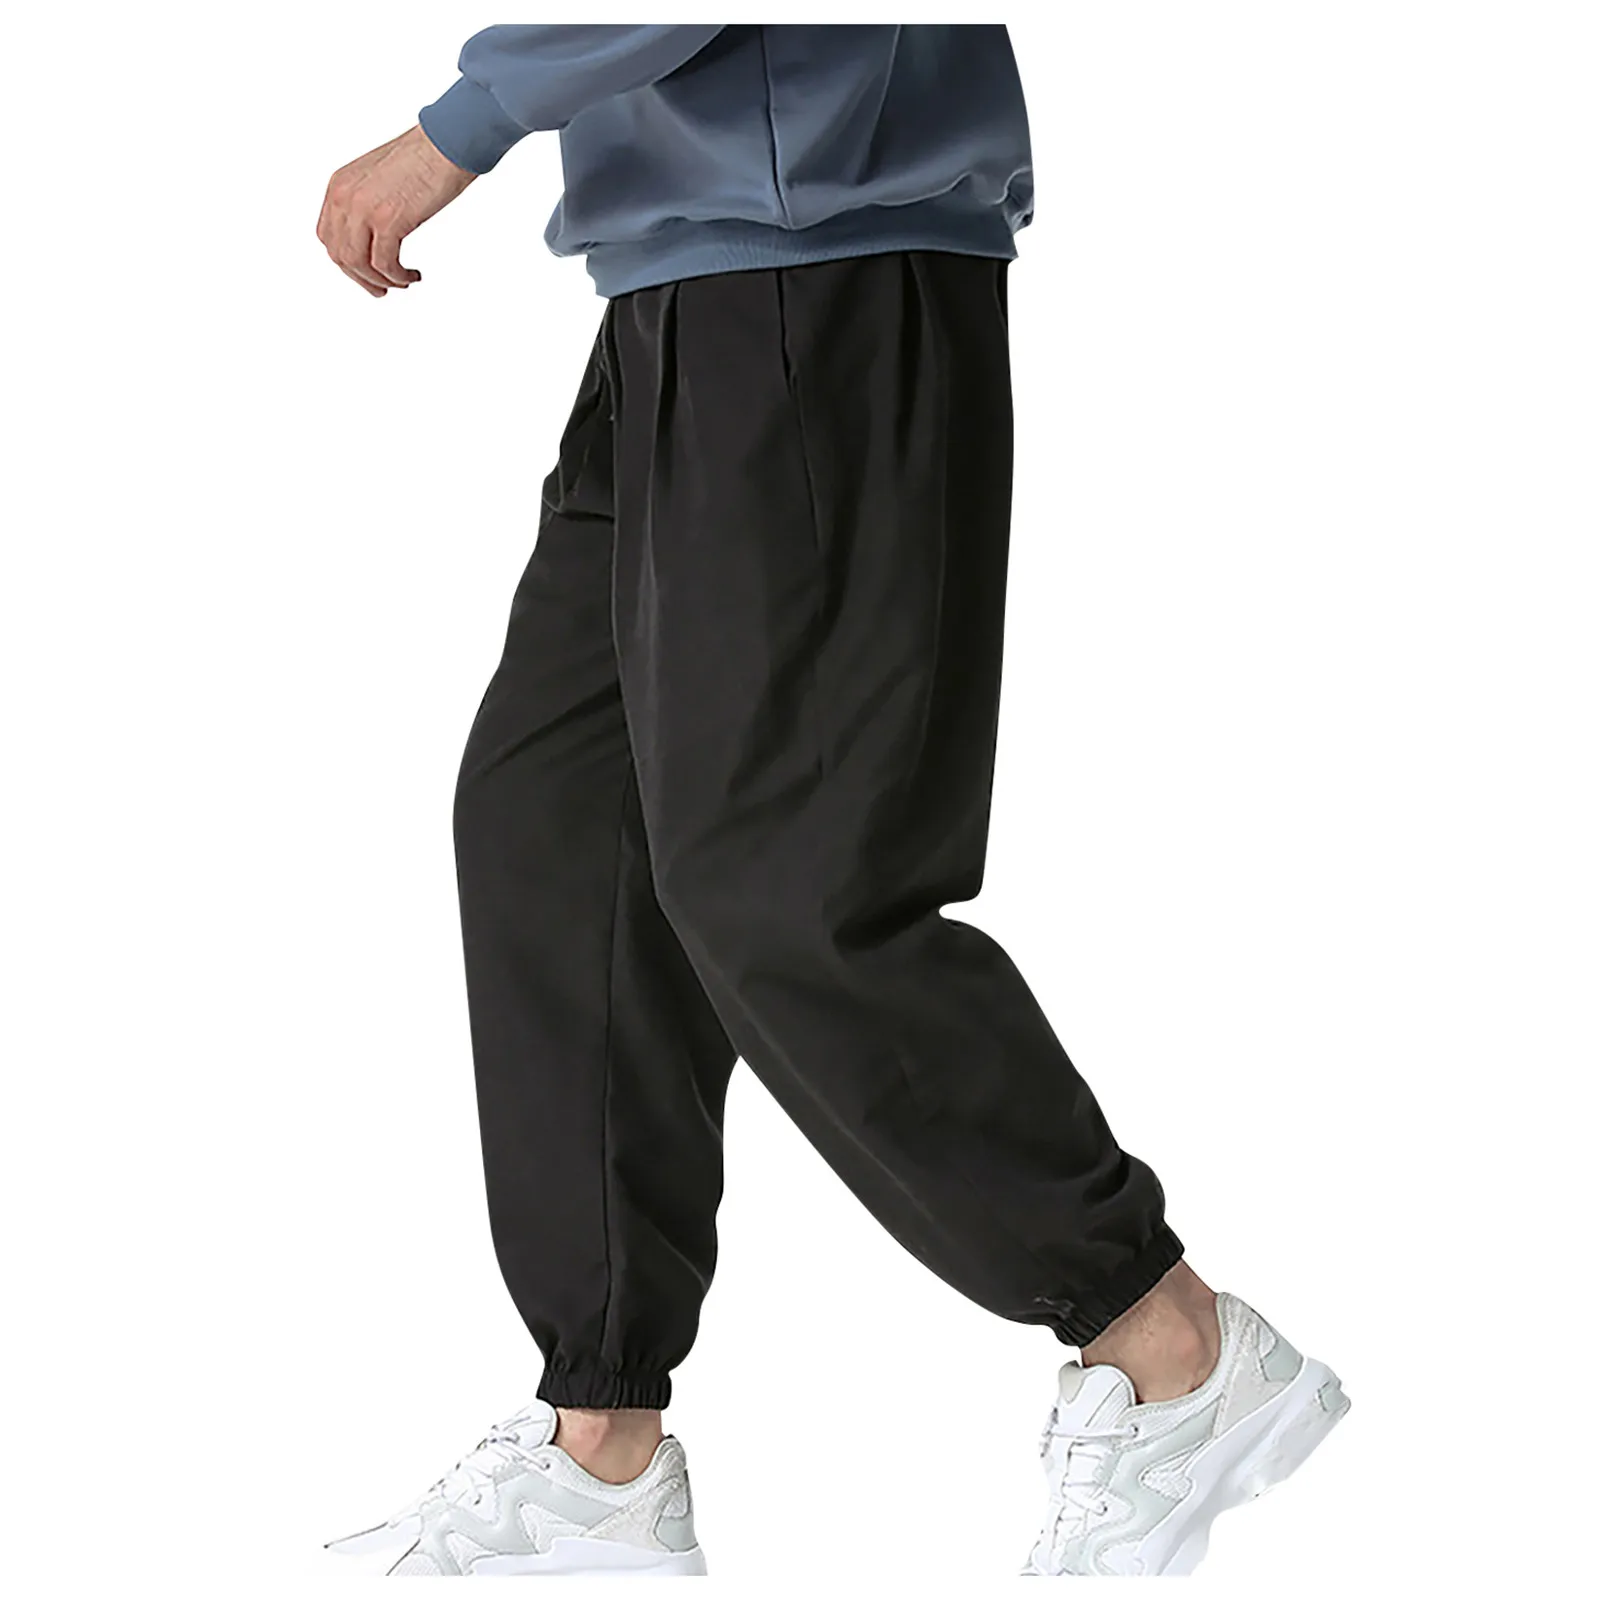 

New Men's Fashion Solid Colors Drawstring Loose Trousers Casual Hip hop Elastic High Waist Pants Sweatpants Pantalones Hombre#g3